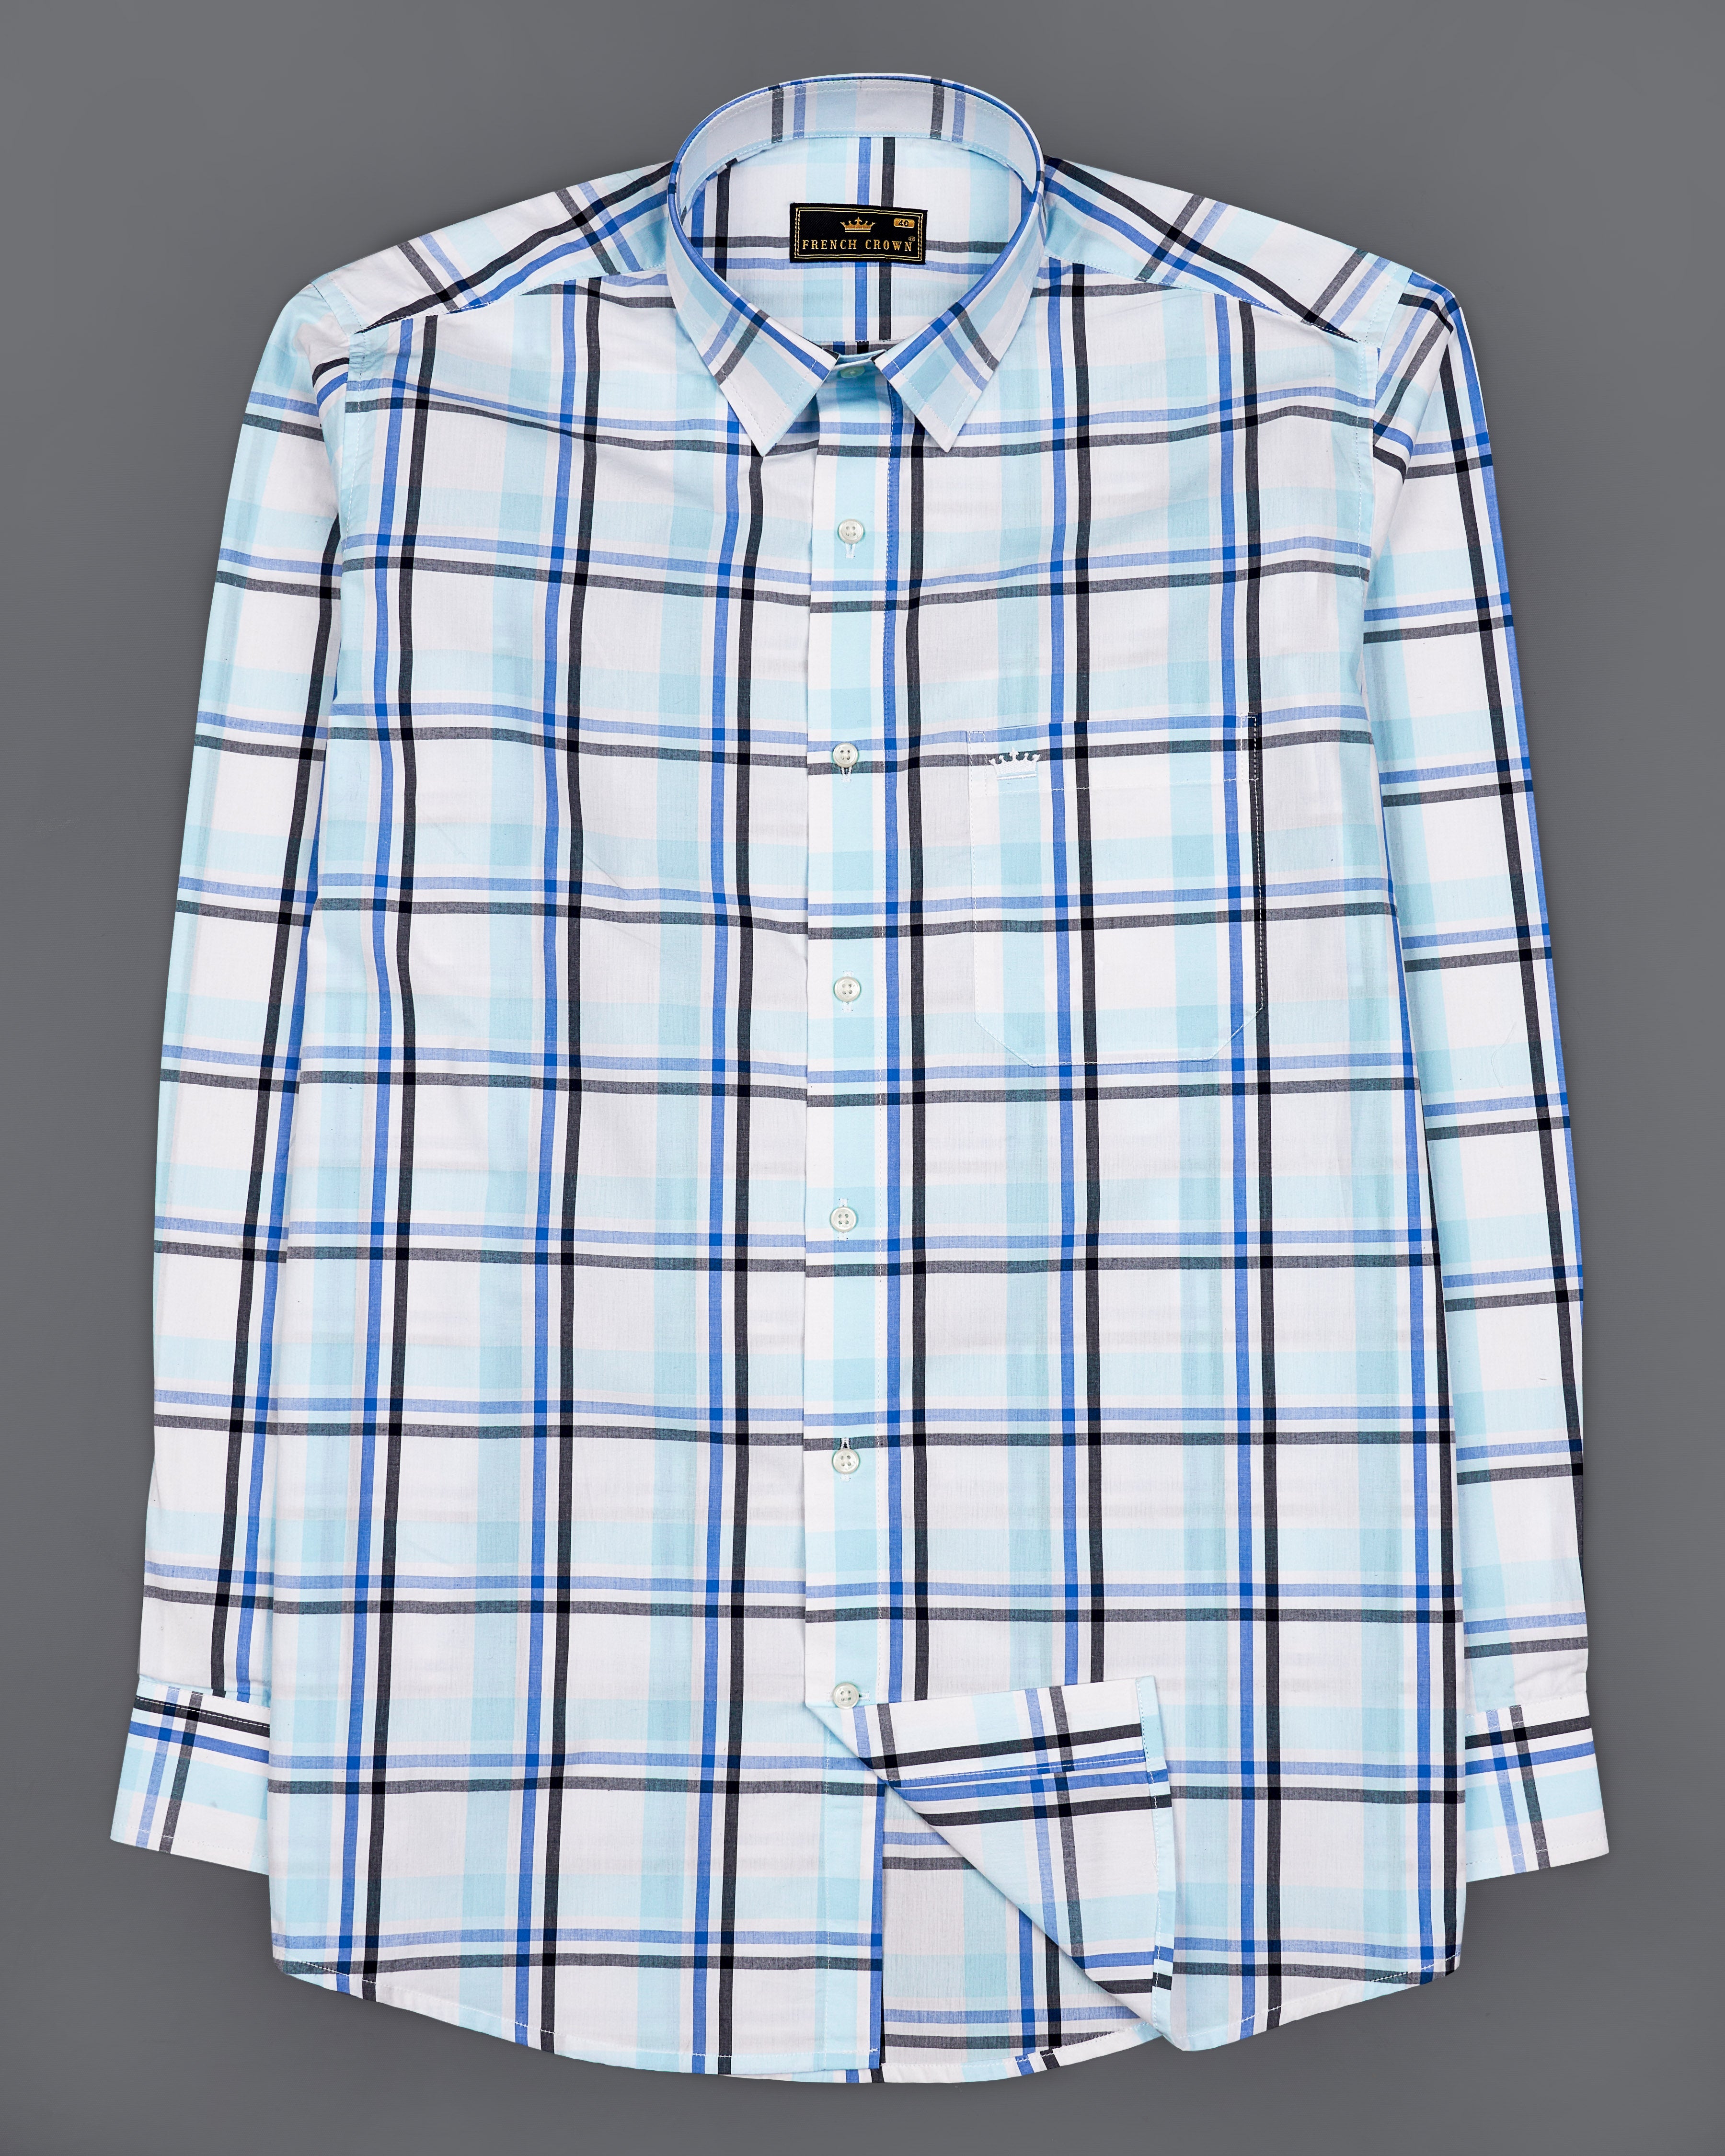 Bright White with Coral Aqua Blue and Black Plaid Premium Cotton Shirt